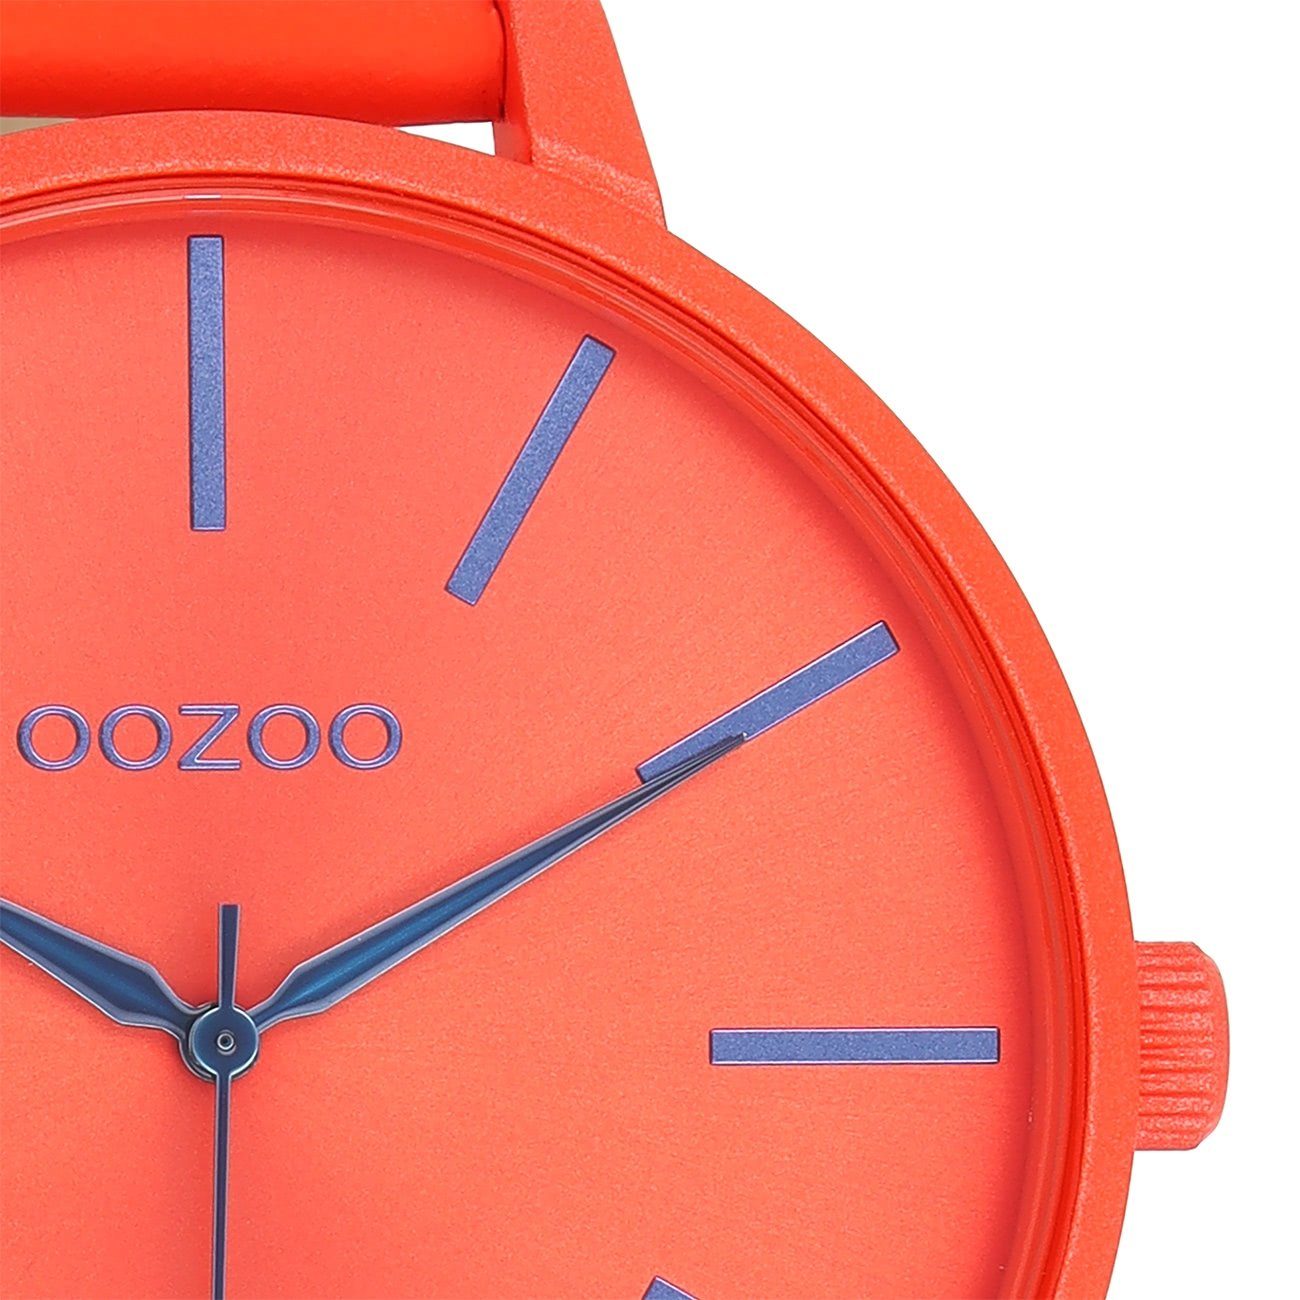 OOZOO Fashion rot,orange, Damen rund, Armbanduhr Quarzuhr groß Oozoo Analog, Lederarmband Damenuhr (ca. extra 48mm), Timepieces